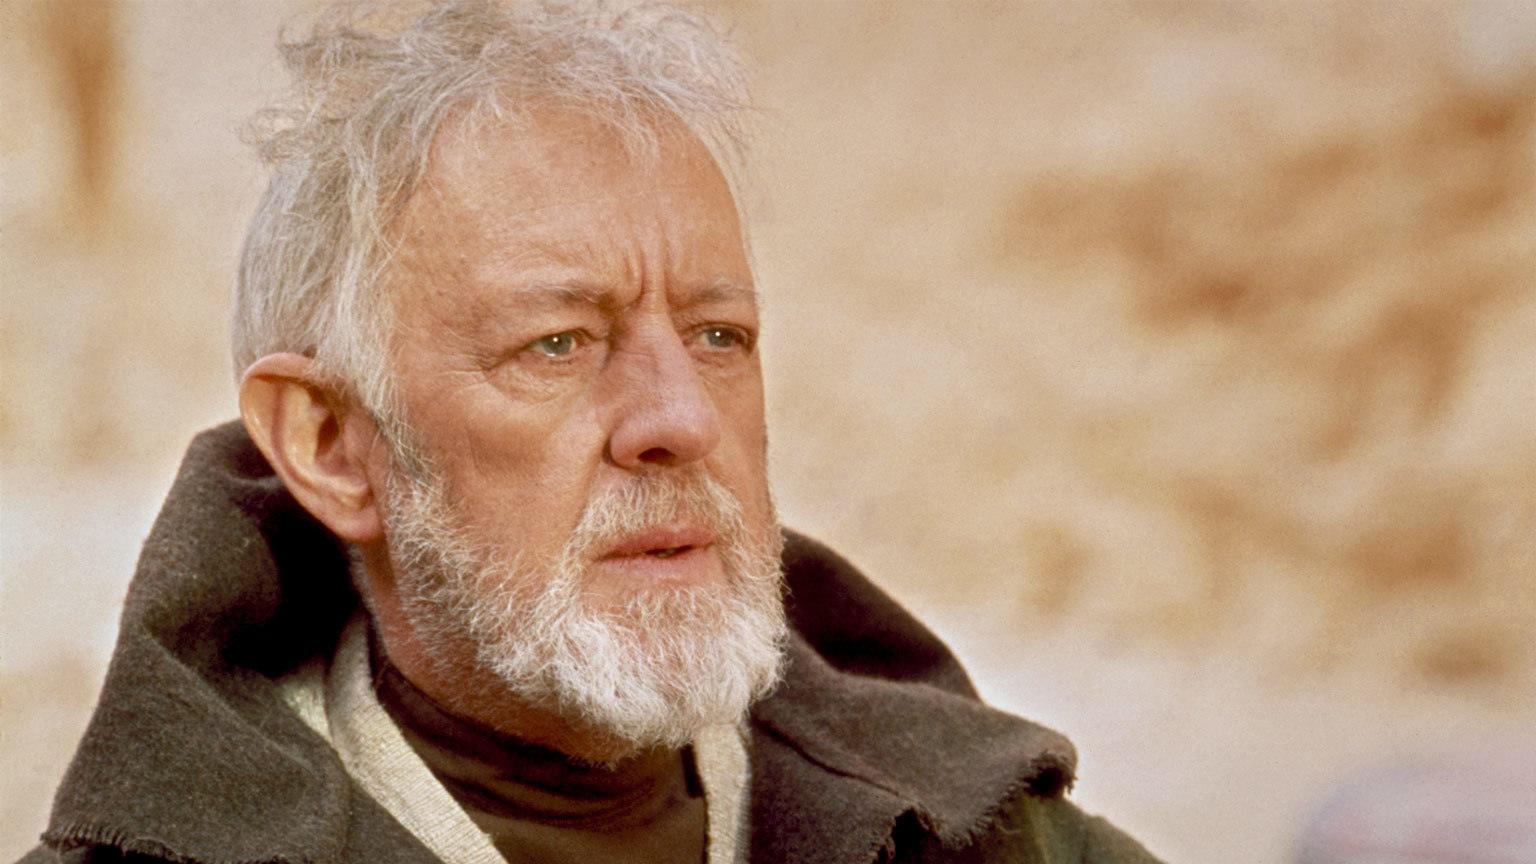 Obi-Wan Kenobi Star Wars Stand-Alone Film in Early Development